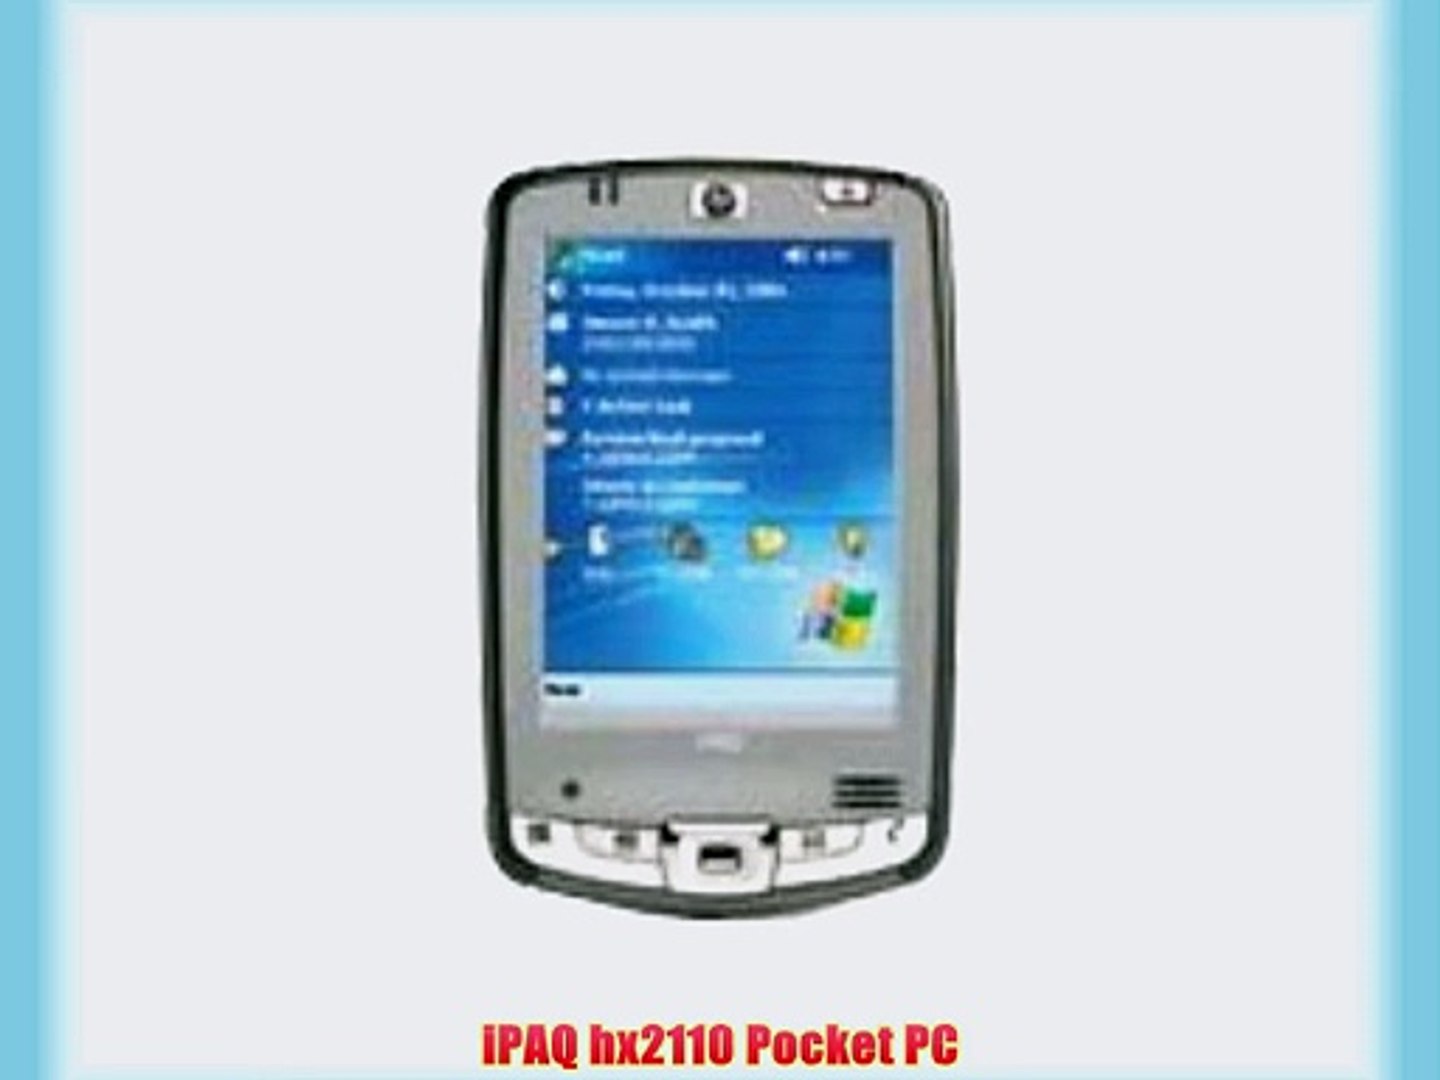 Wi-Fi 3.5 color TFT Windows Mobile 5.0 Premium Edition - Bluetooth Handheld HP iPAQ Pocket PC hx2490b 240 x 320 